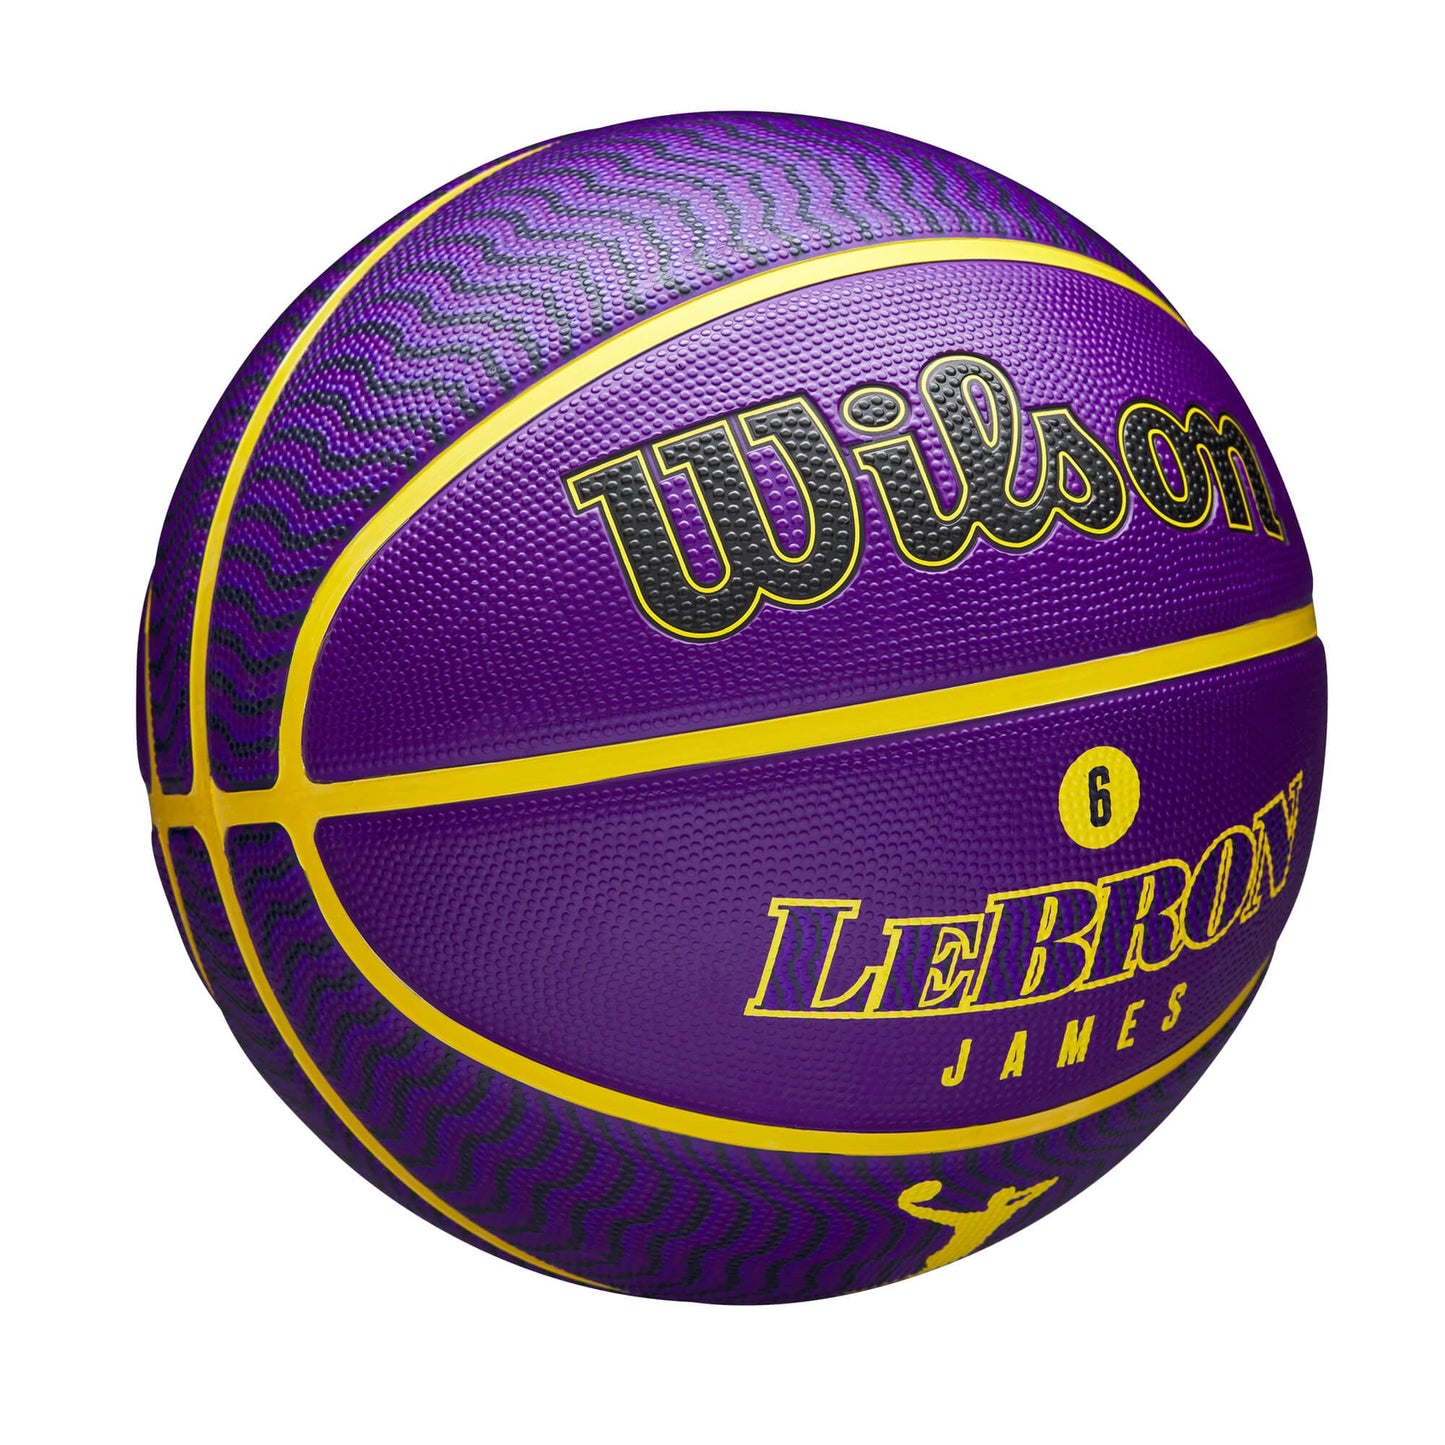 WILSON NBA PLAYER ICON - OUTDOOR - LEBRON Purple (sz. 7)